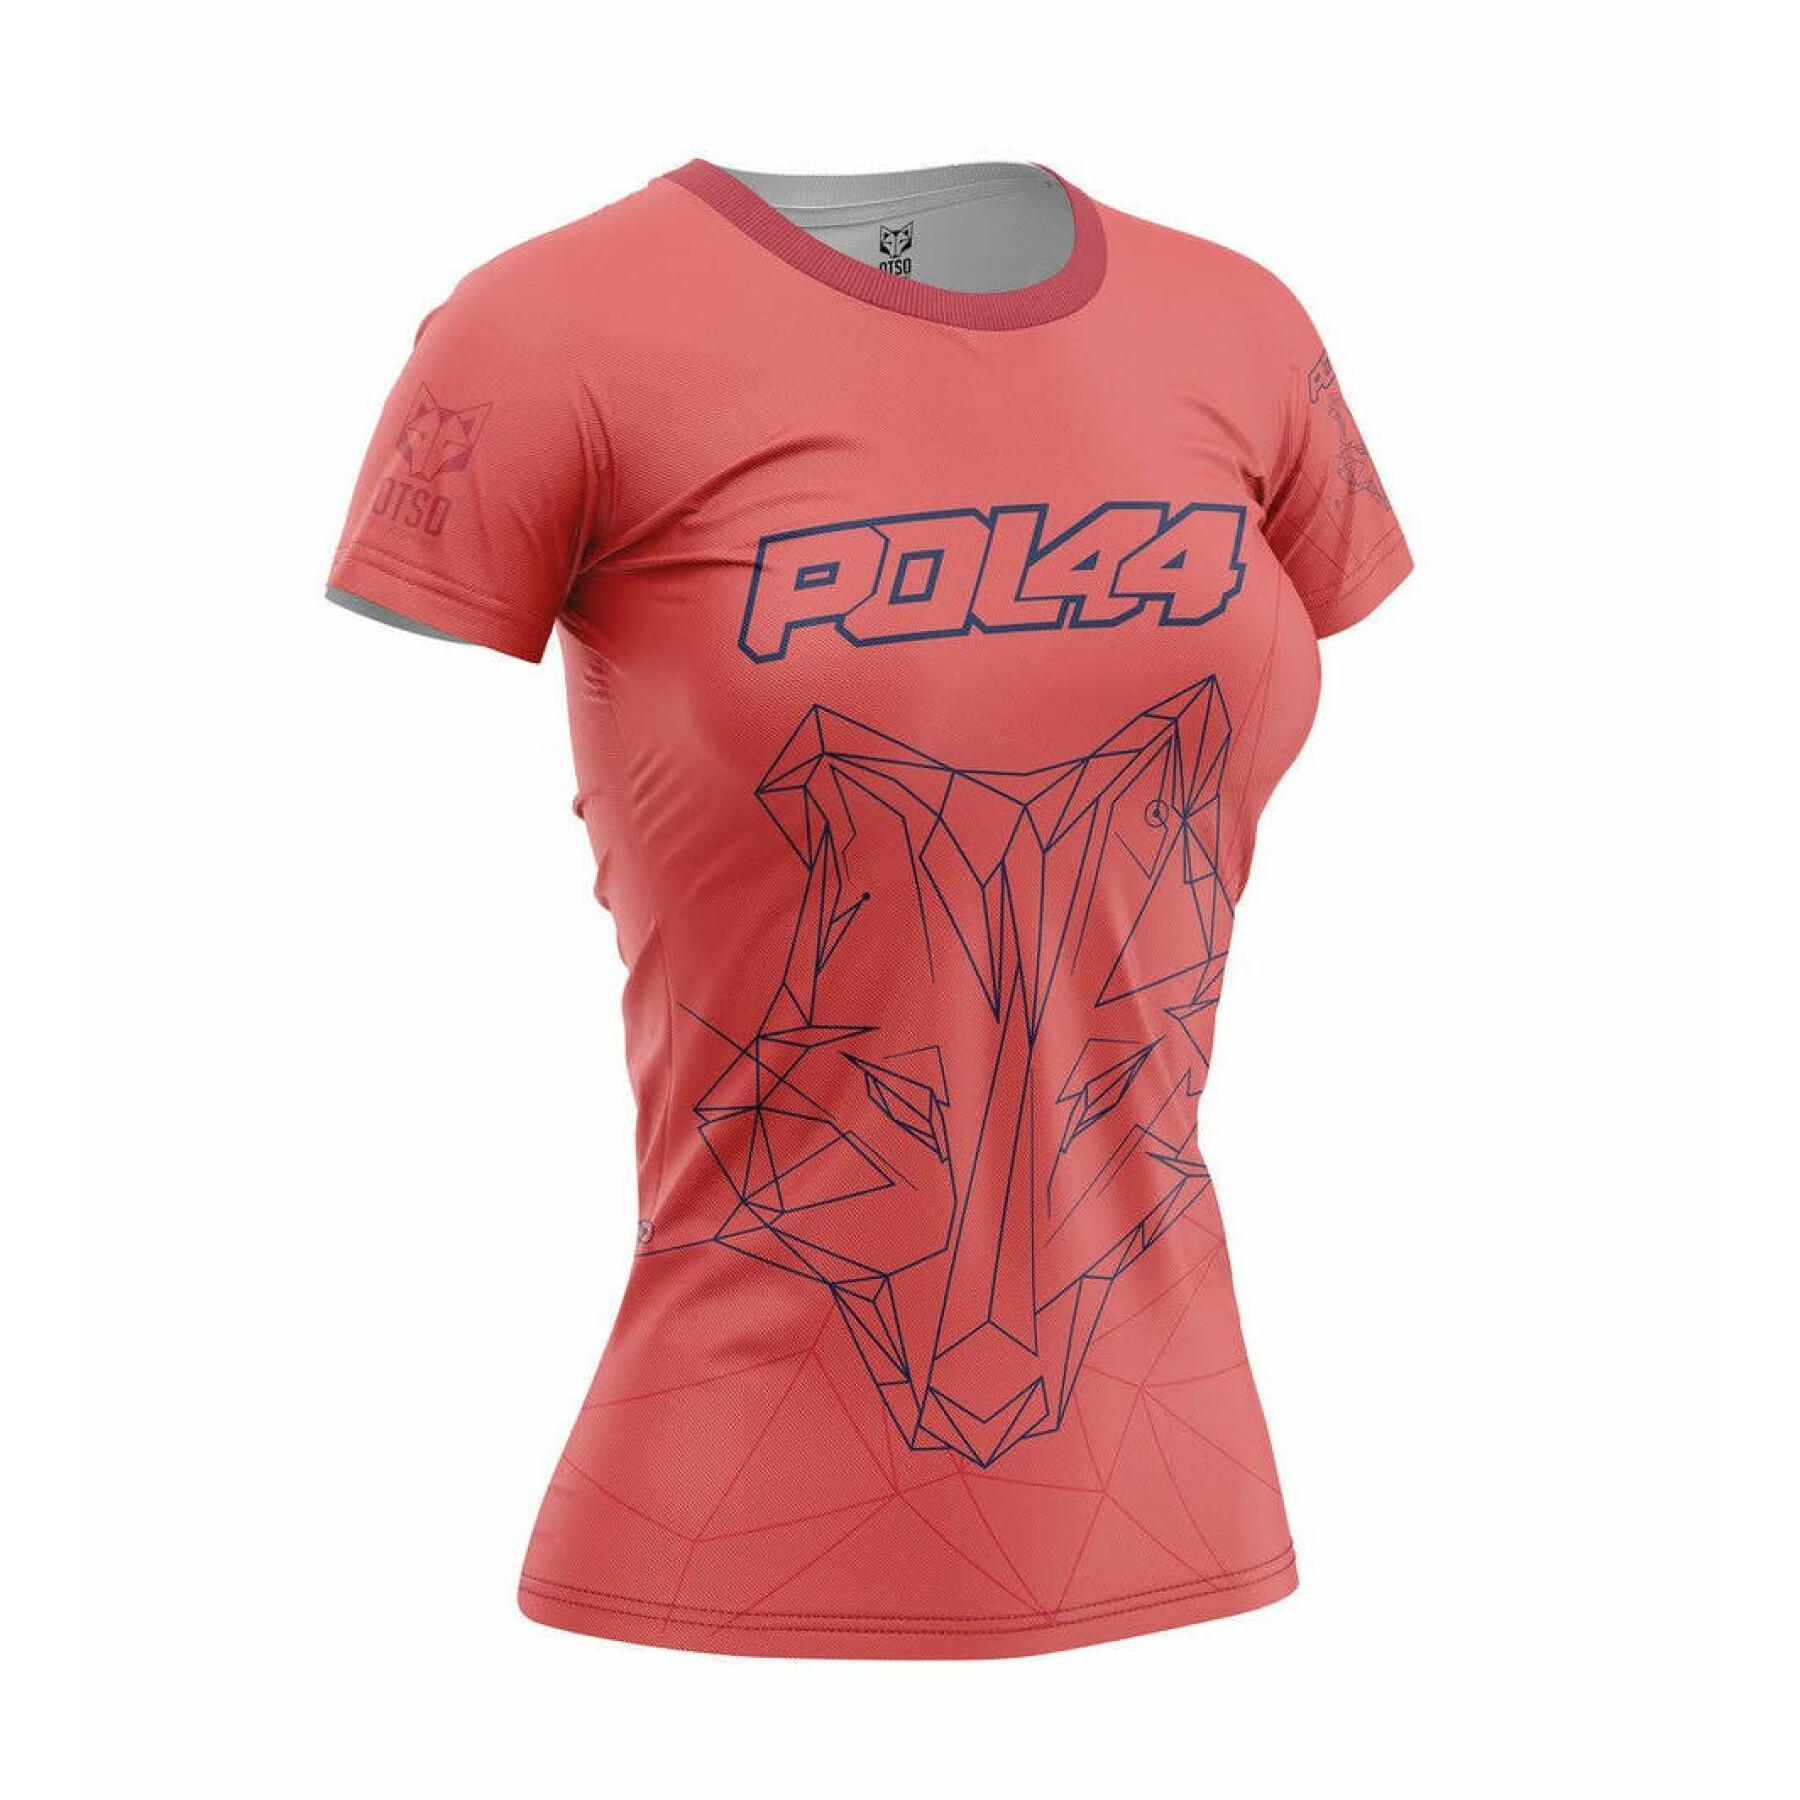 Women's T-shirt Otso Pol44